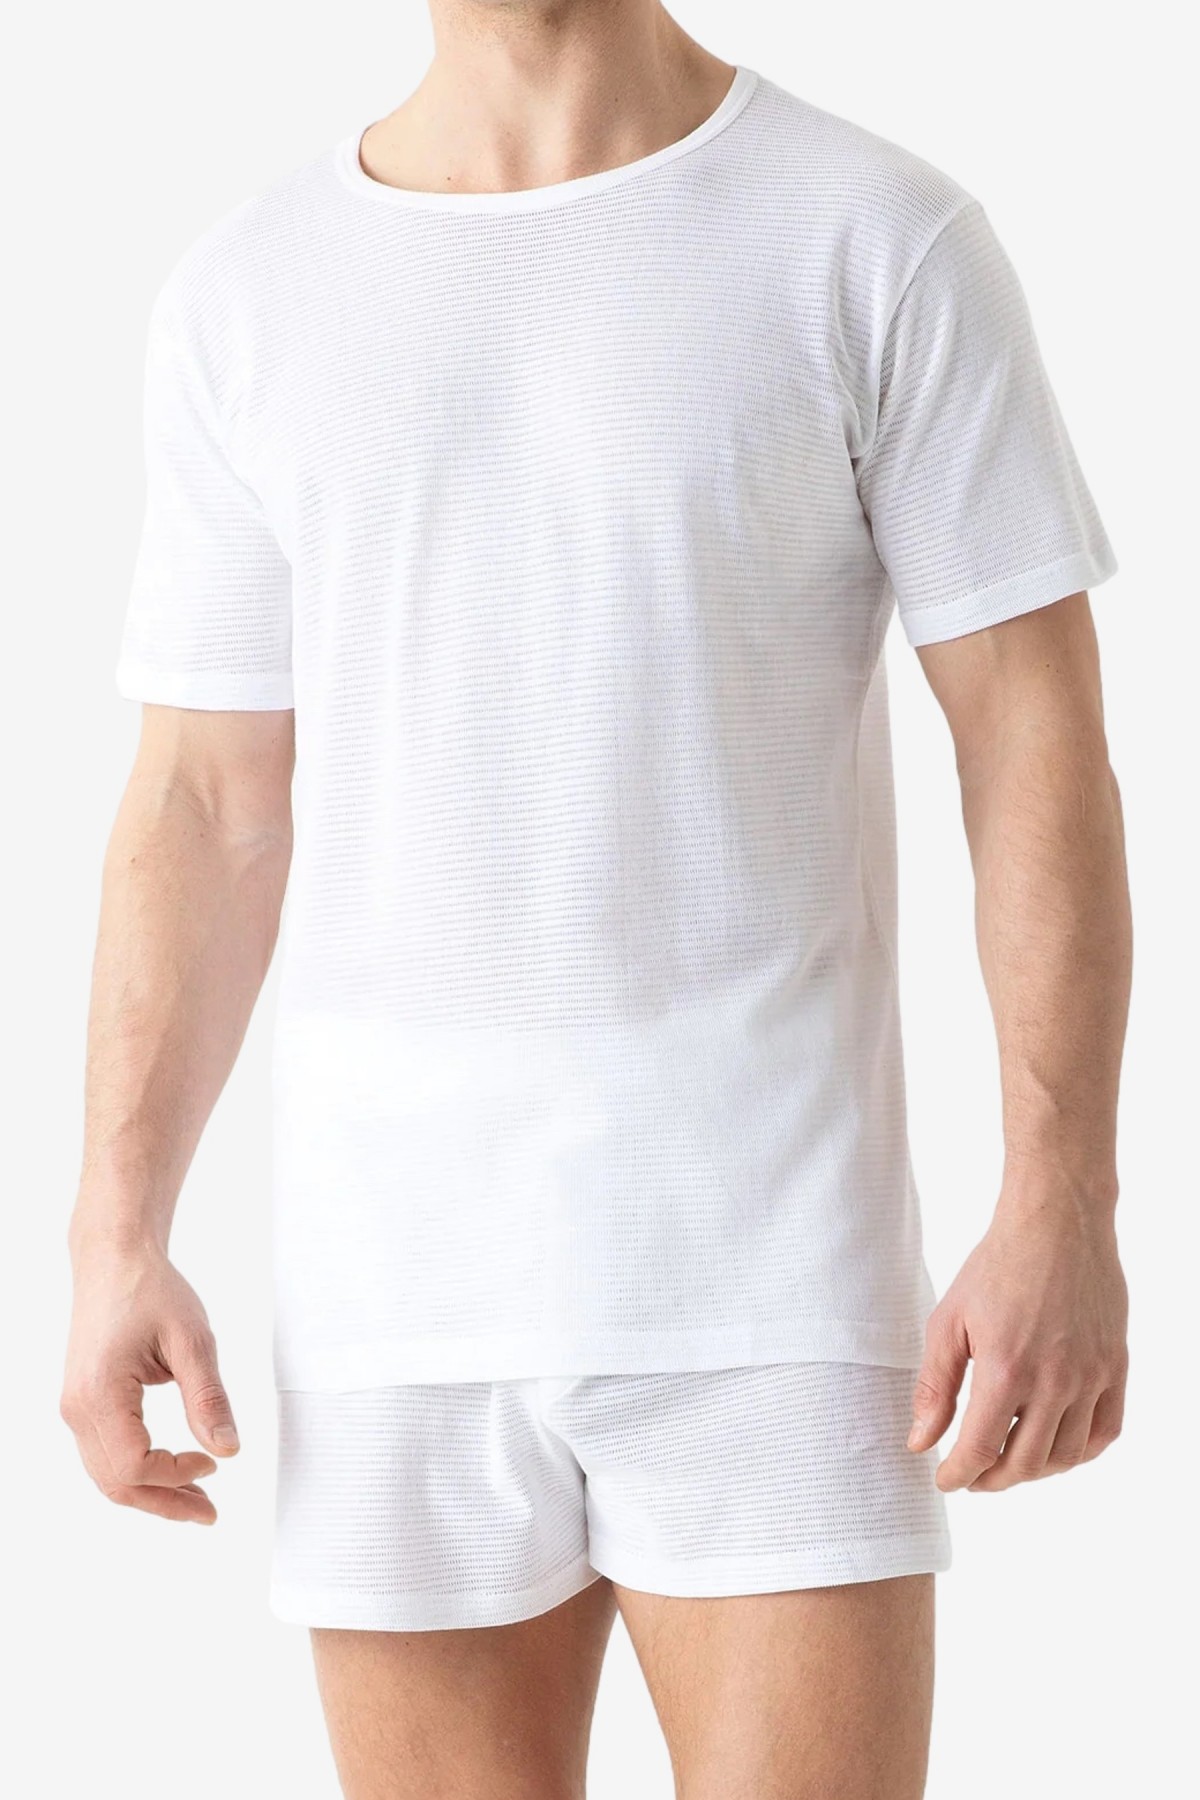 Sunspel Cellular Cotton Crew Neck T-Shirt in White